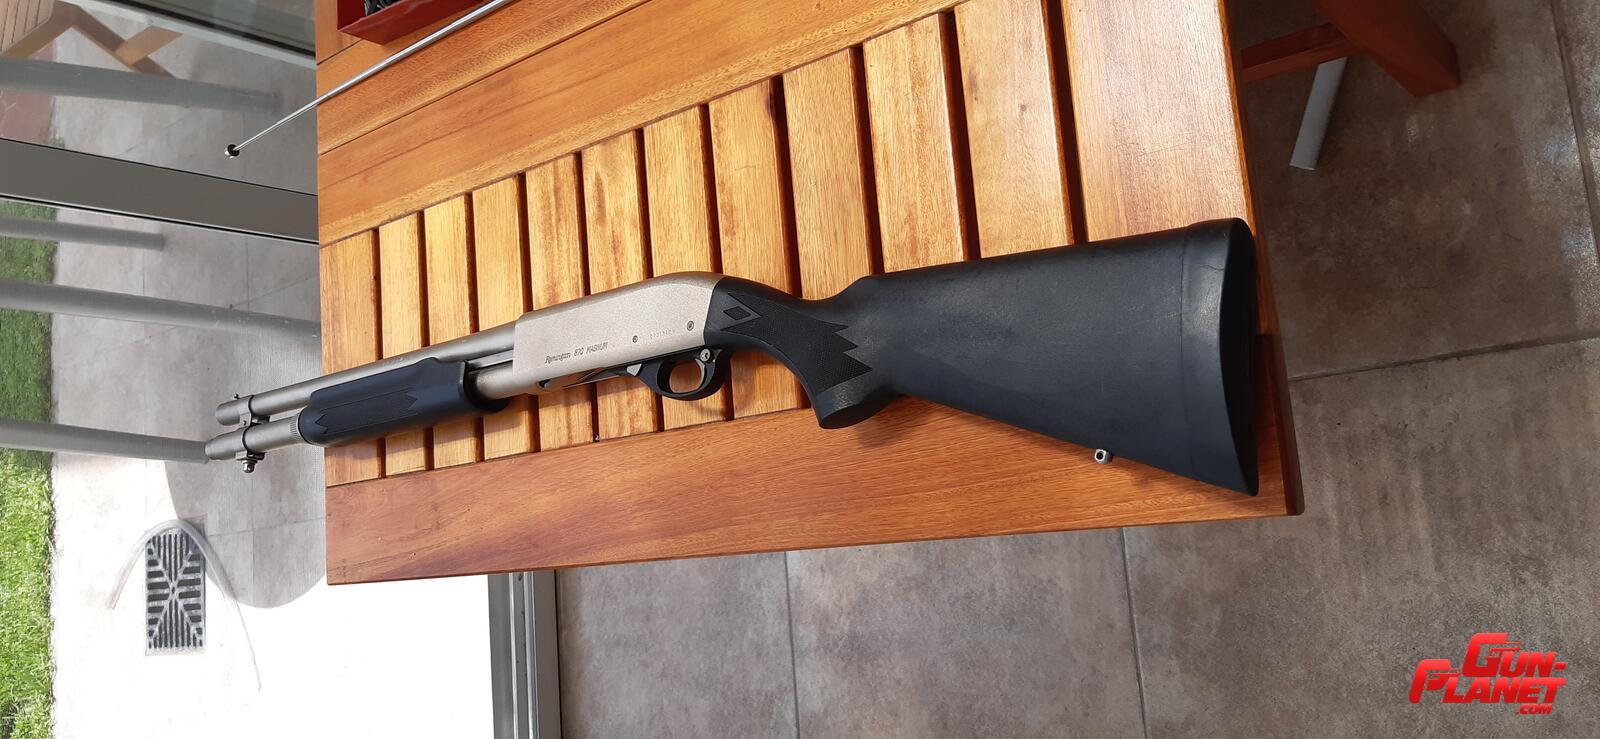 Gun Planet  Remington 870 Police Express Magnum cal 12